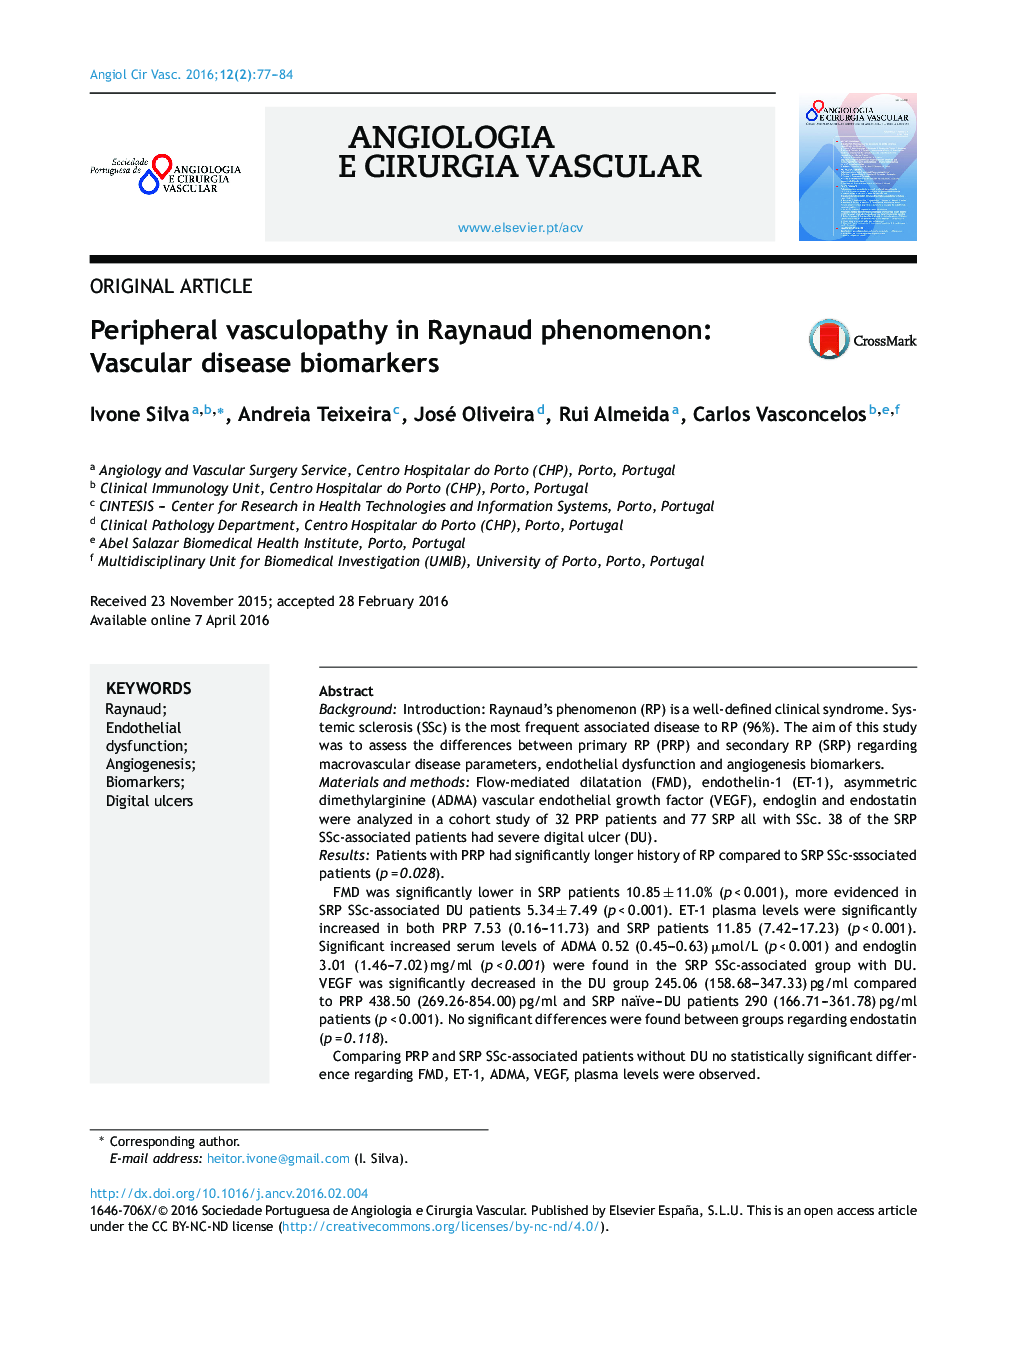 Peripheral vasculopathy in Raynaud phenomenon: Vascular disease biomarkers